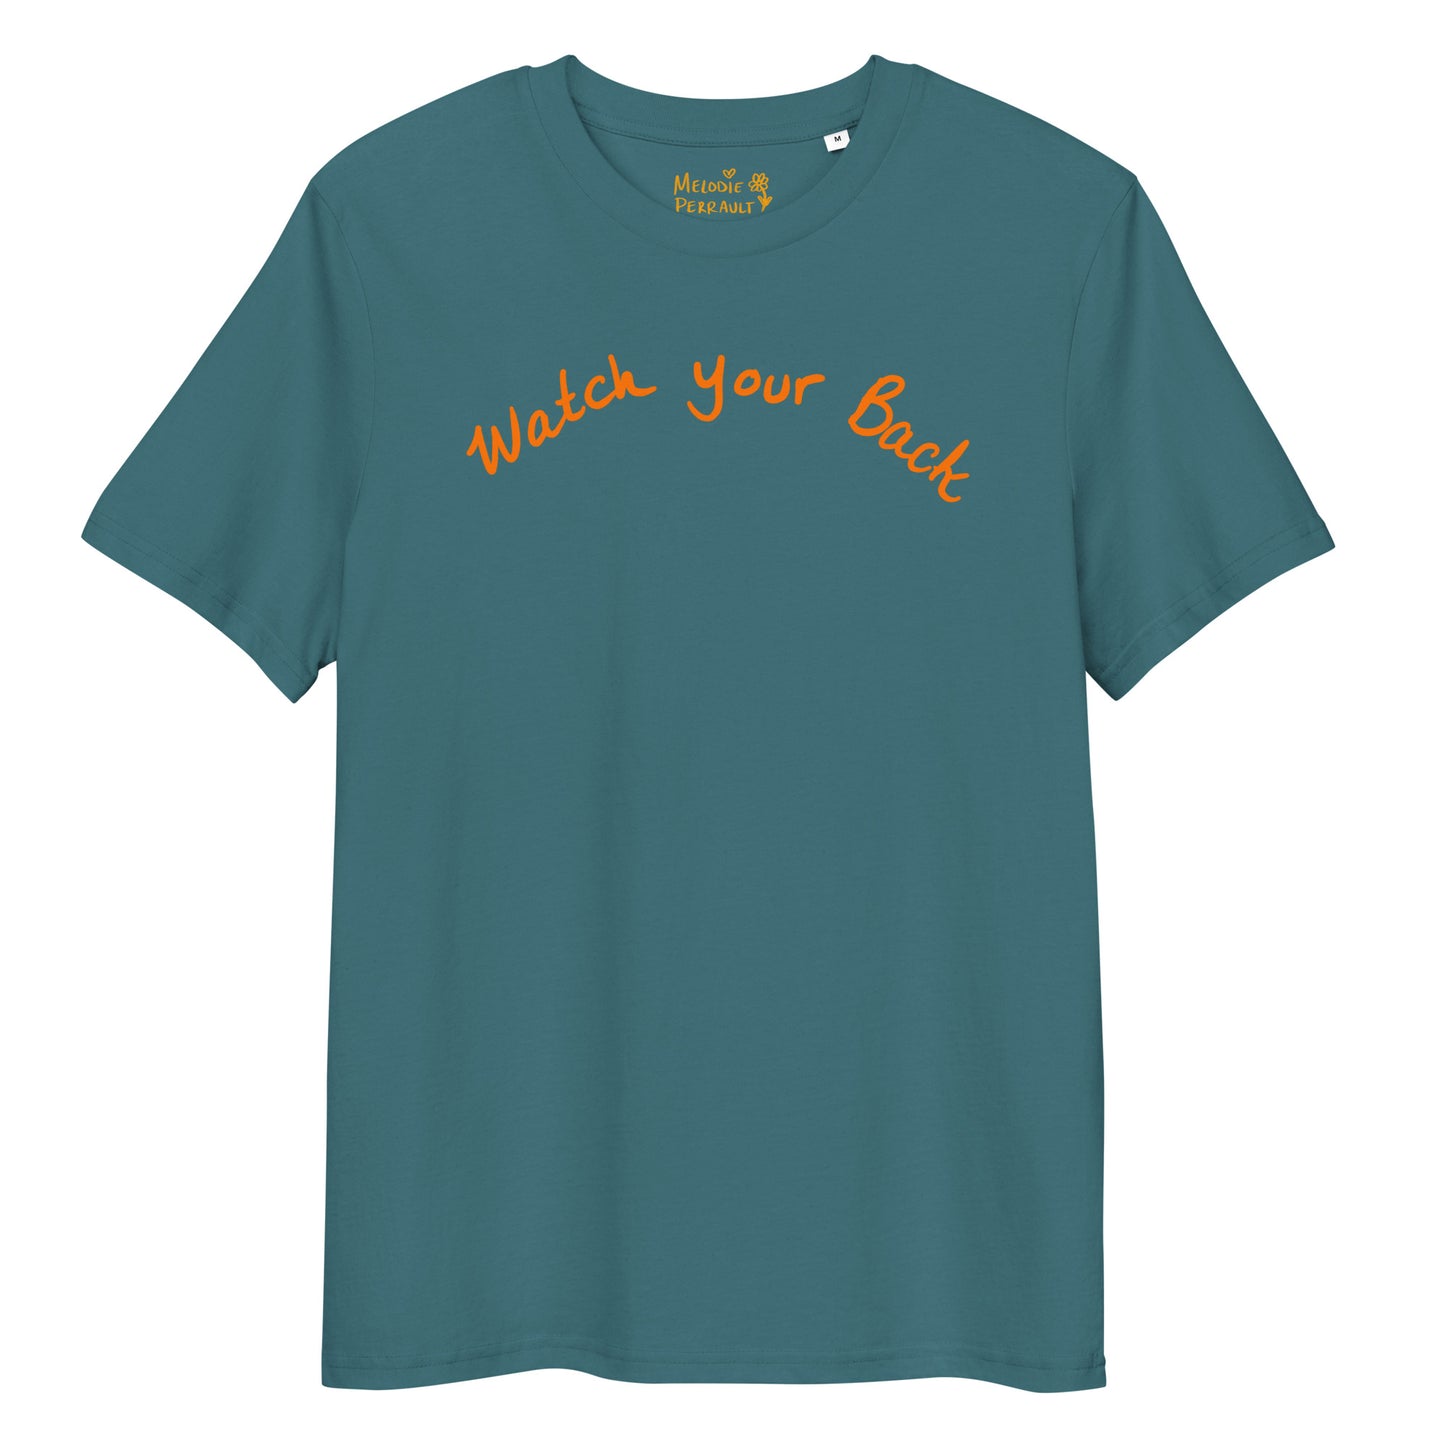 " Watch Your Back " Unisex organic cotton t-shirt